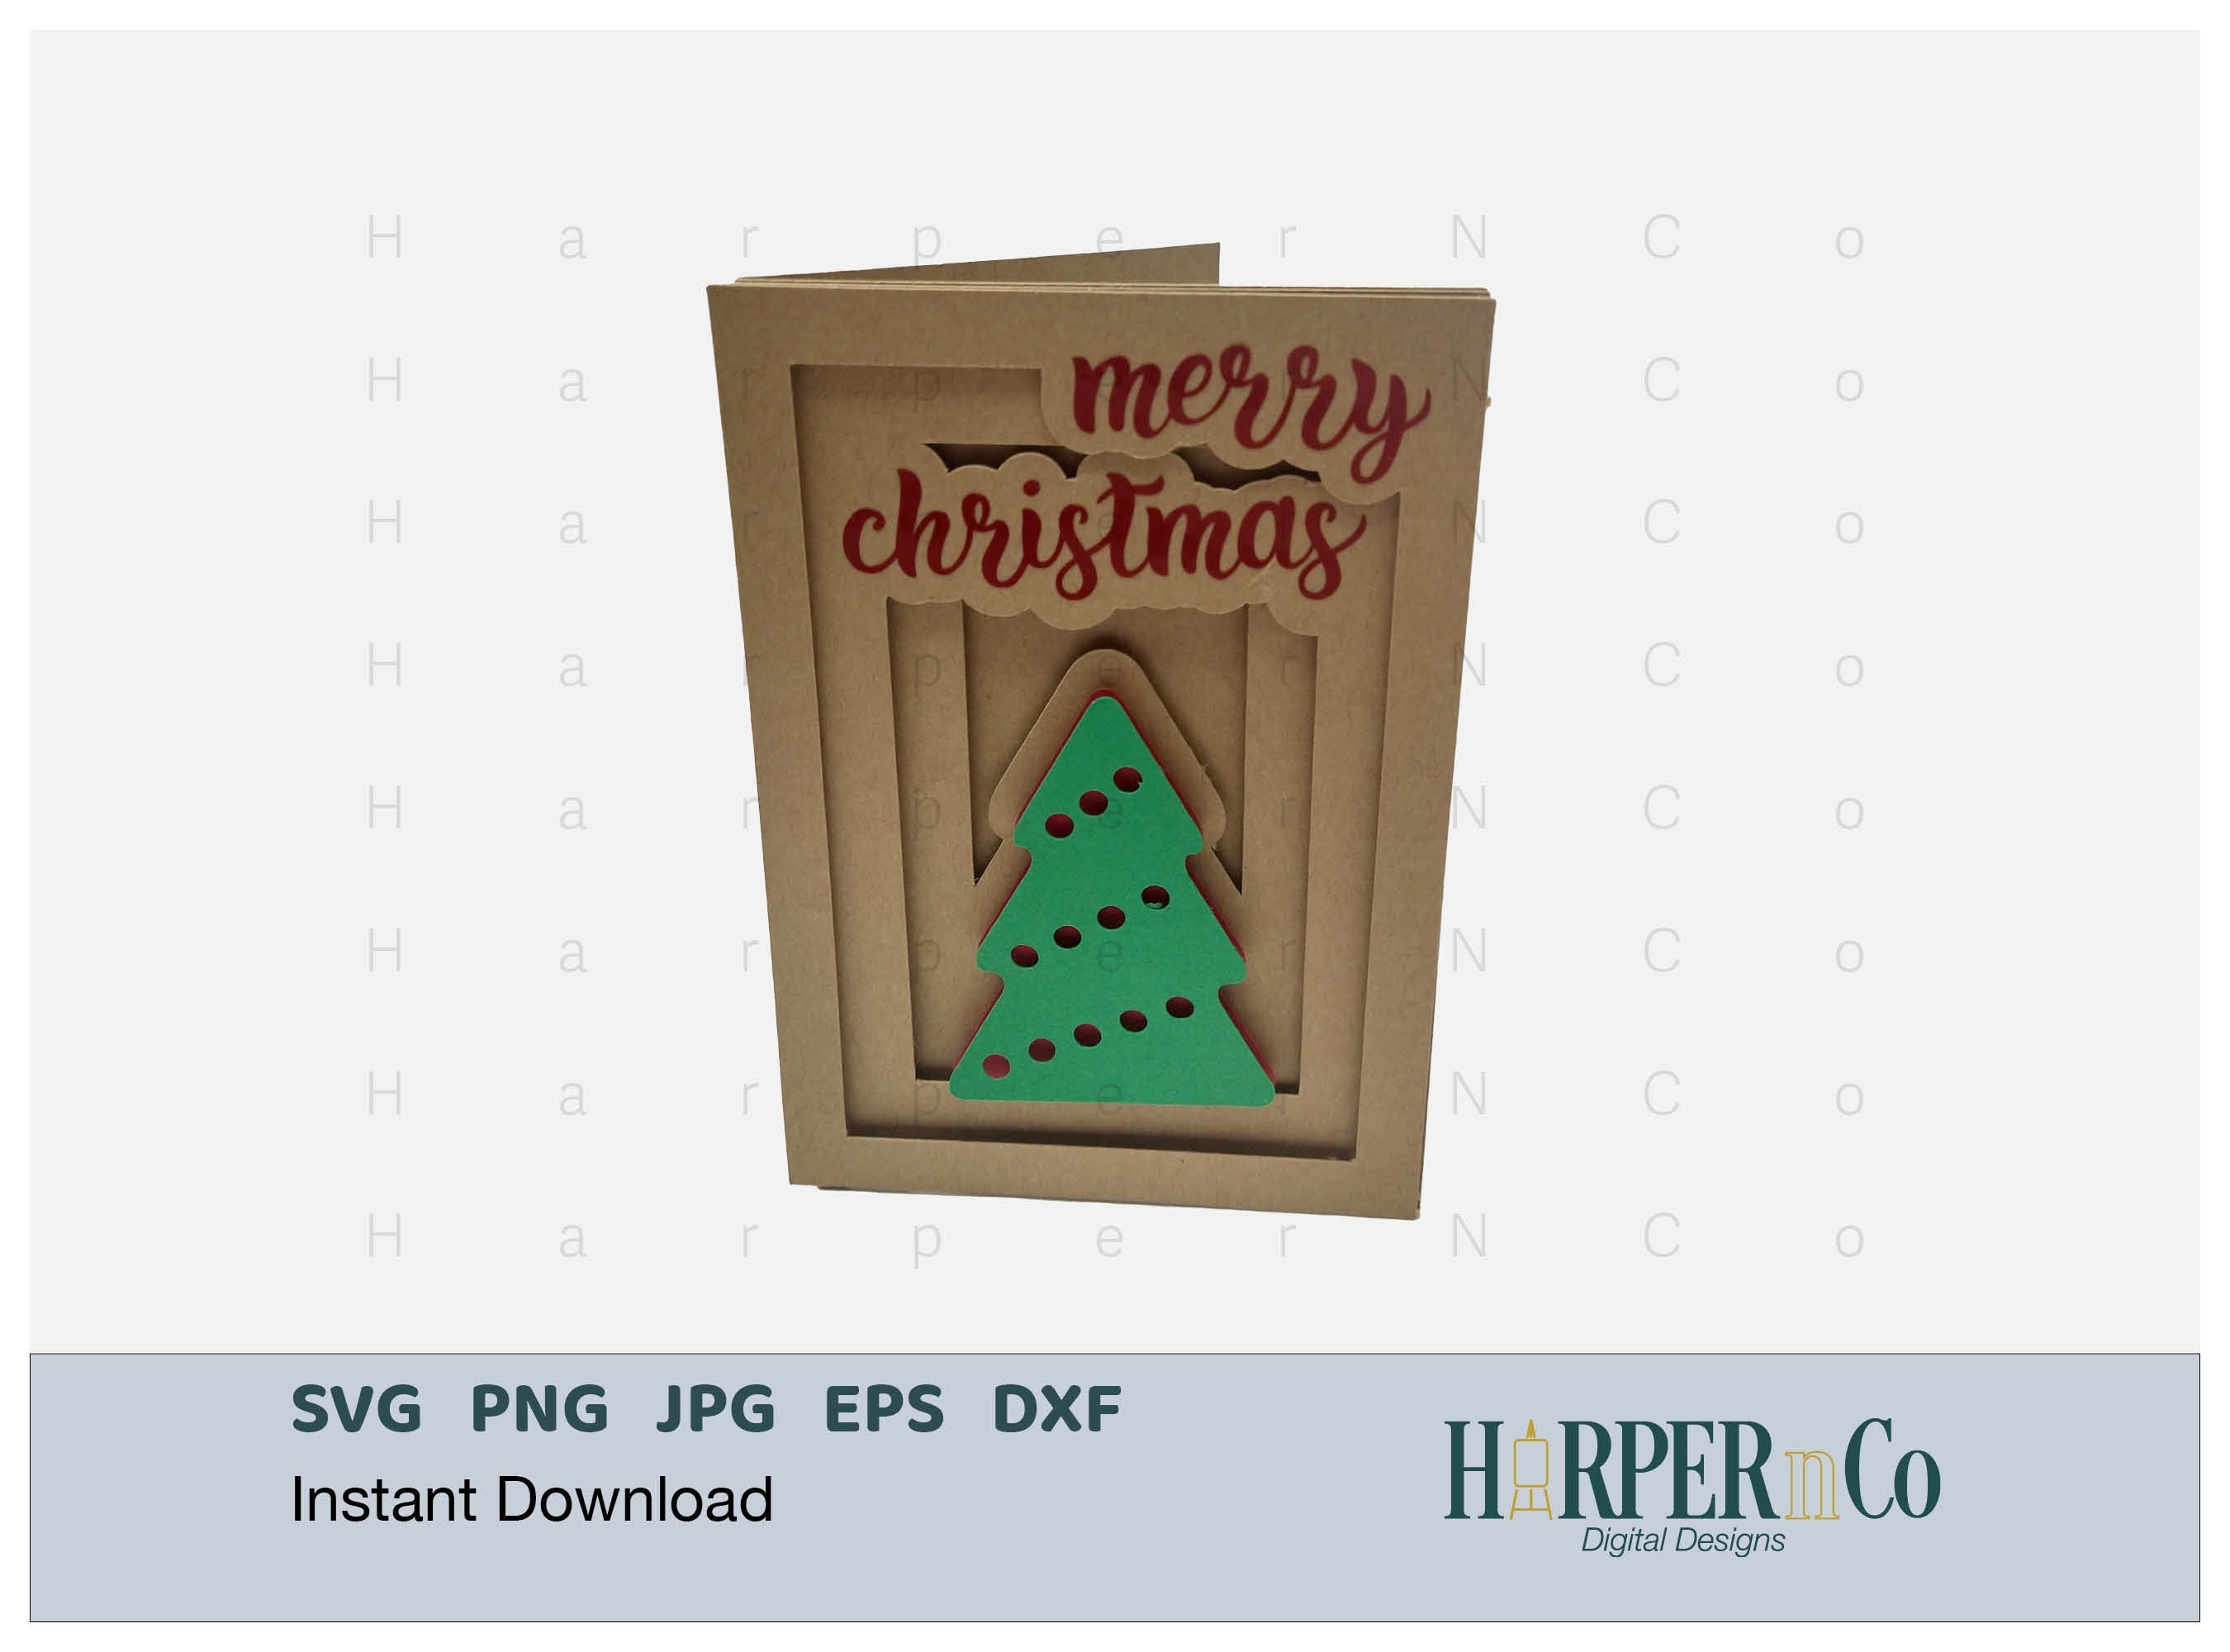 Christmas Tree SVG, Christmas Card 3D Greeting Card, Shadow box card, Cricut, Silhouette, Layered Card, Birthday Card, card template, pop up